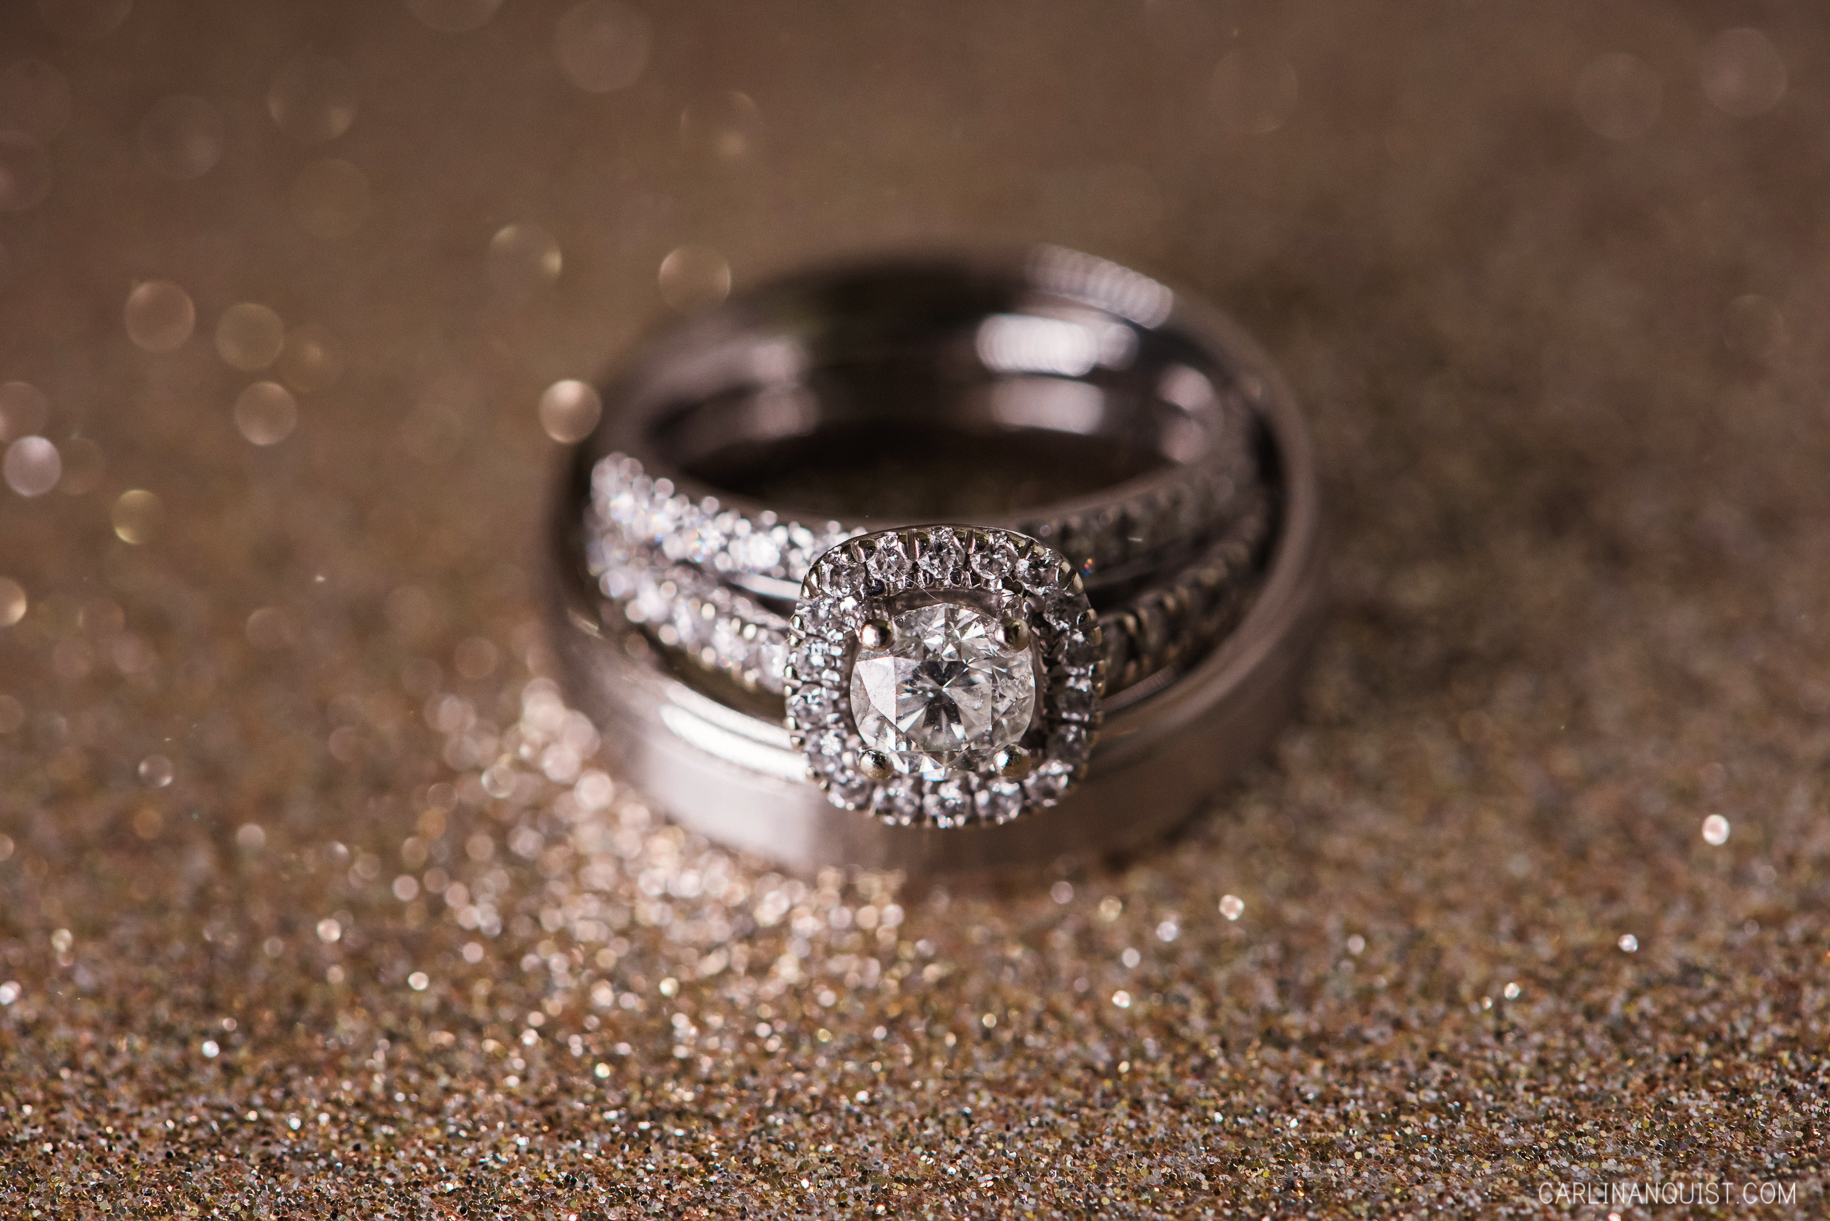 Carlin Anquist | Apple Creek Wedding Photographer | Wedding Rings